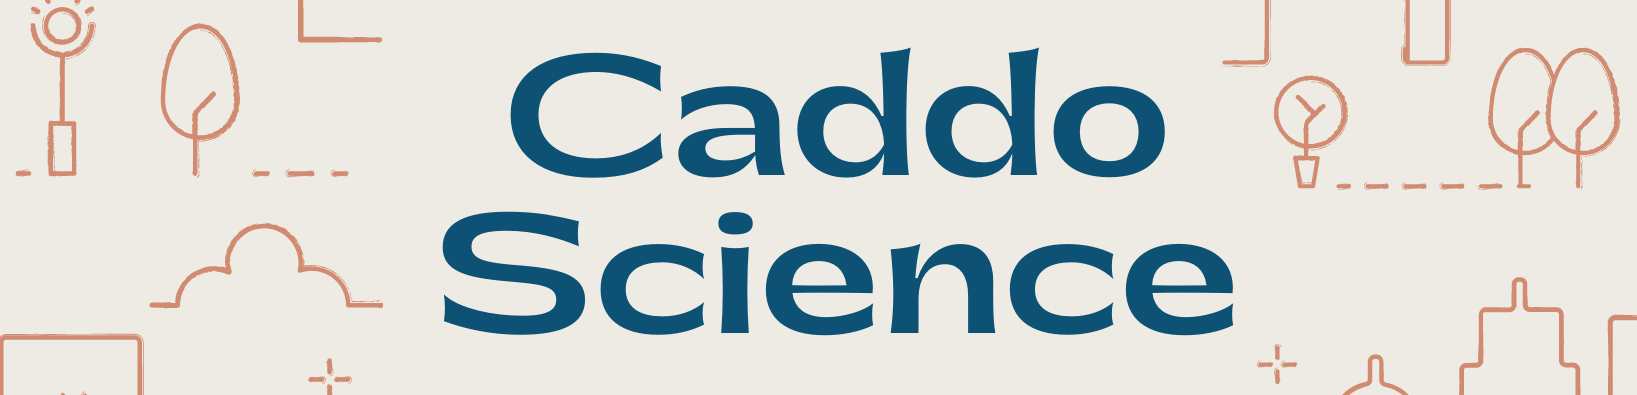 Caddo Science